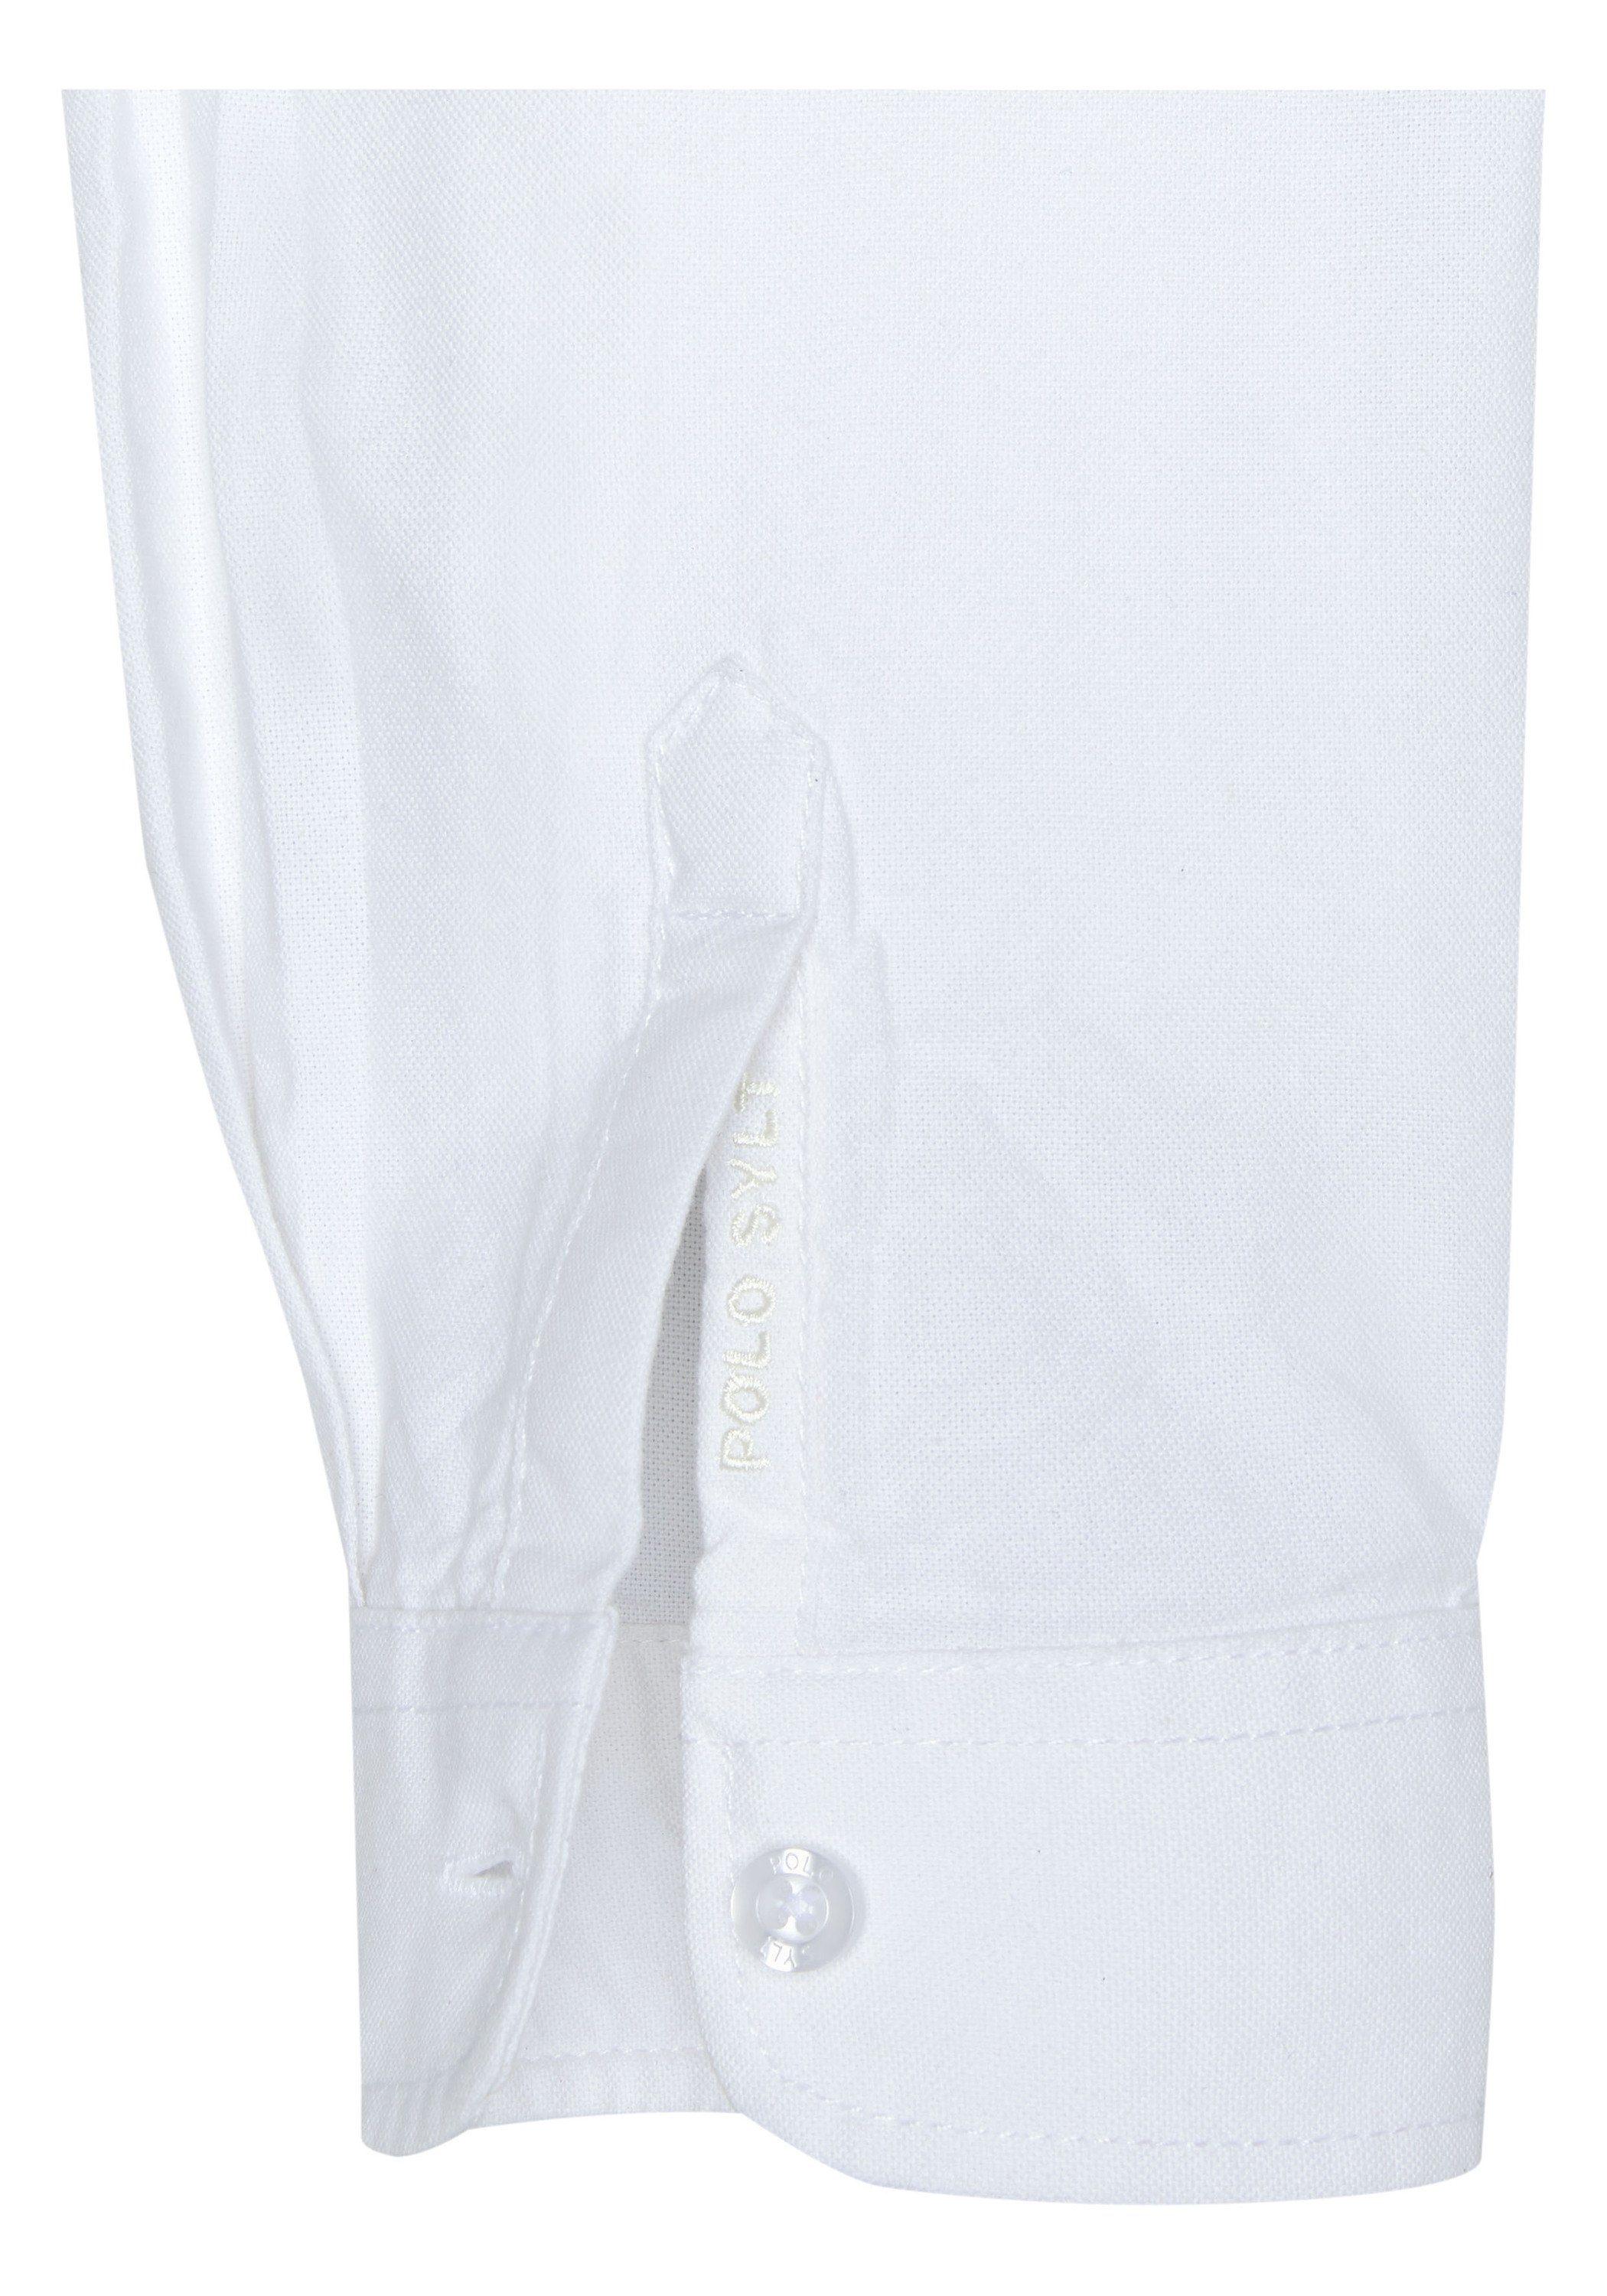 Polo Sylt Qualität aus Oxford Langarmhemd weiß